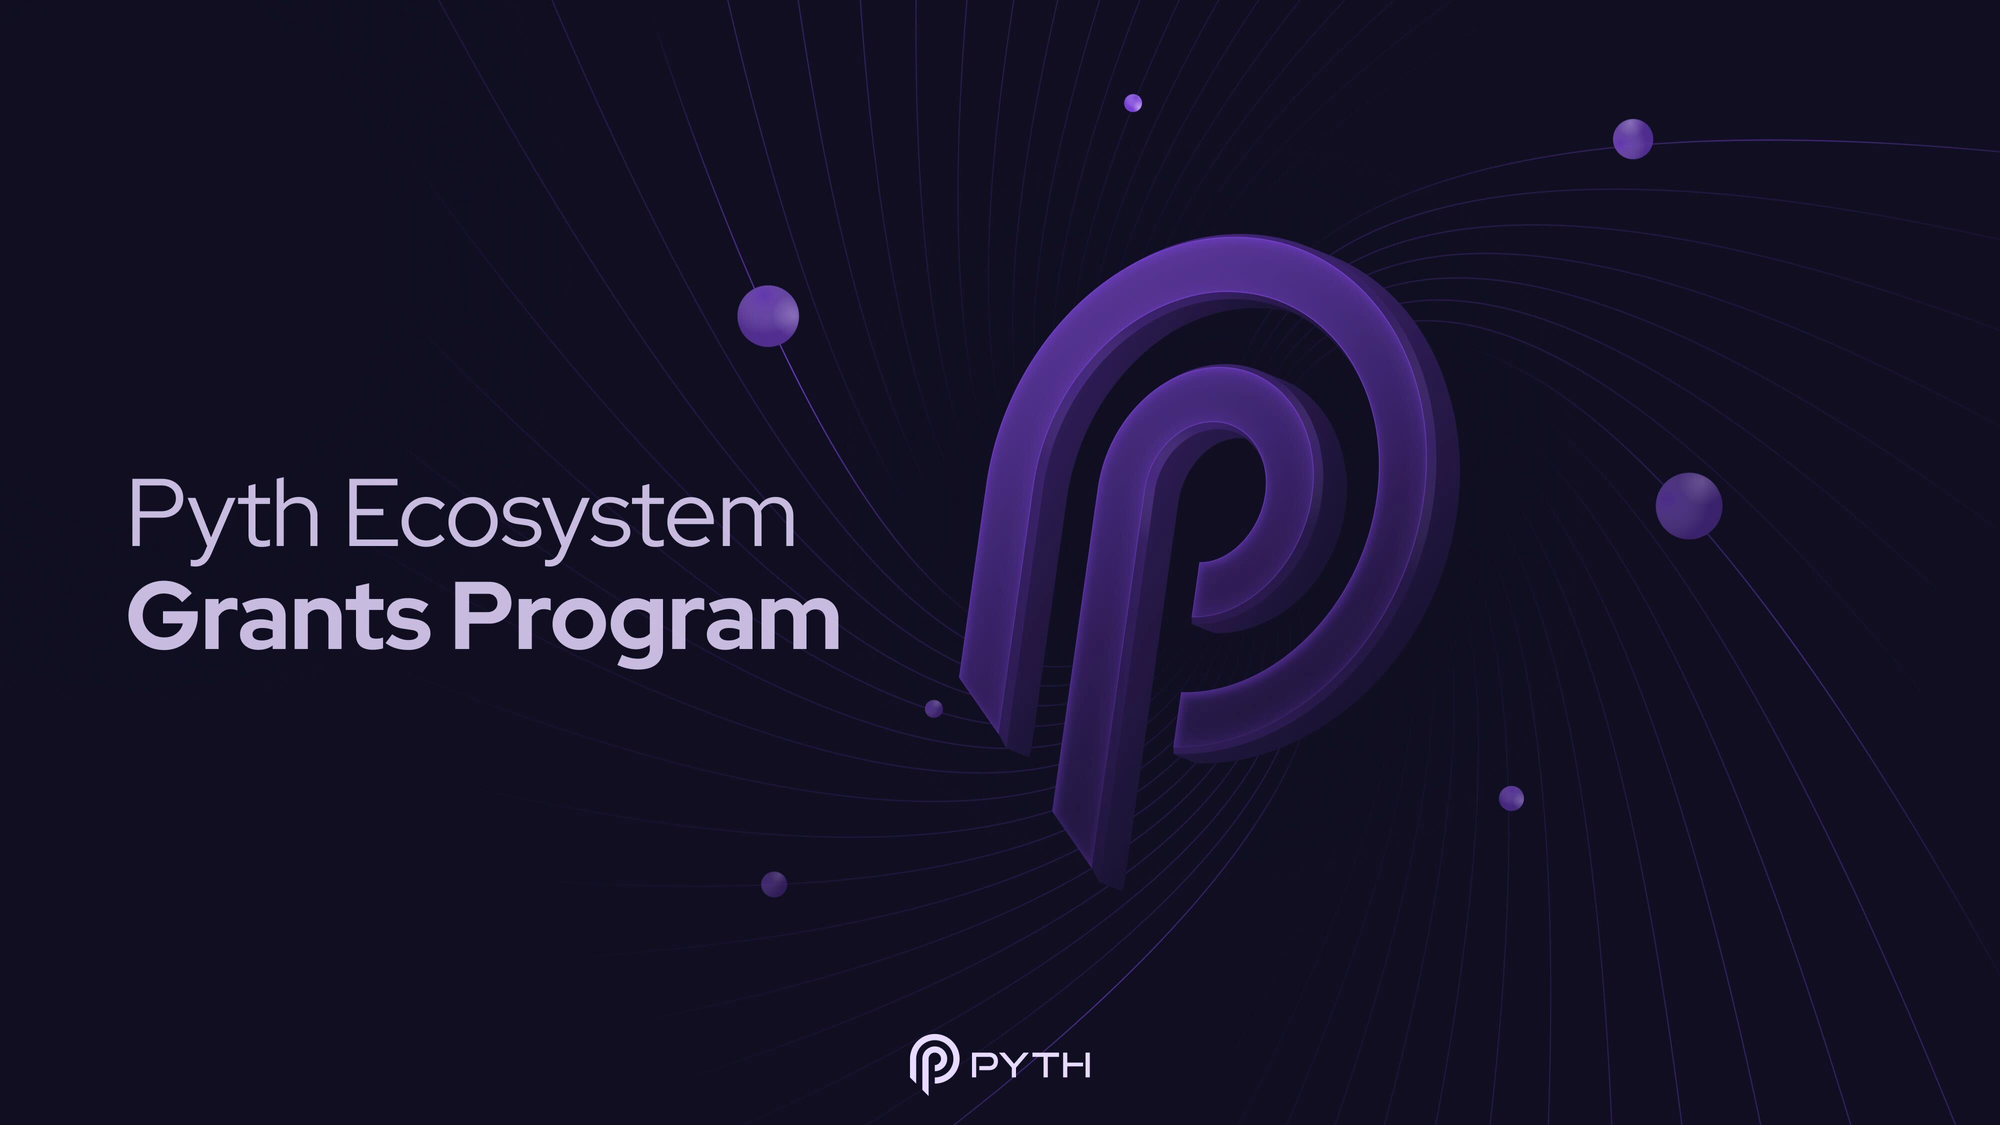 Launch of Pyth Ecosystem Grants Program